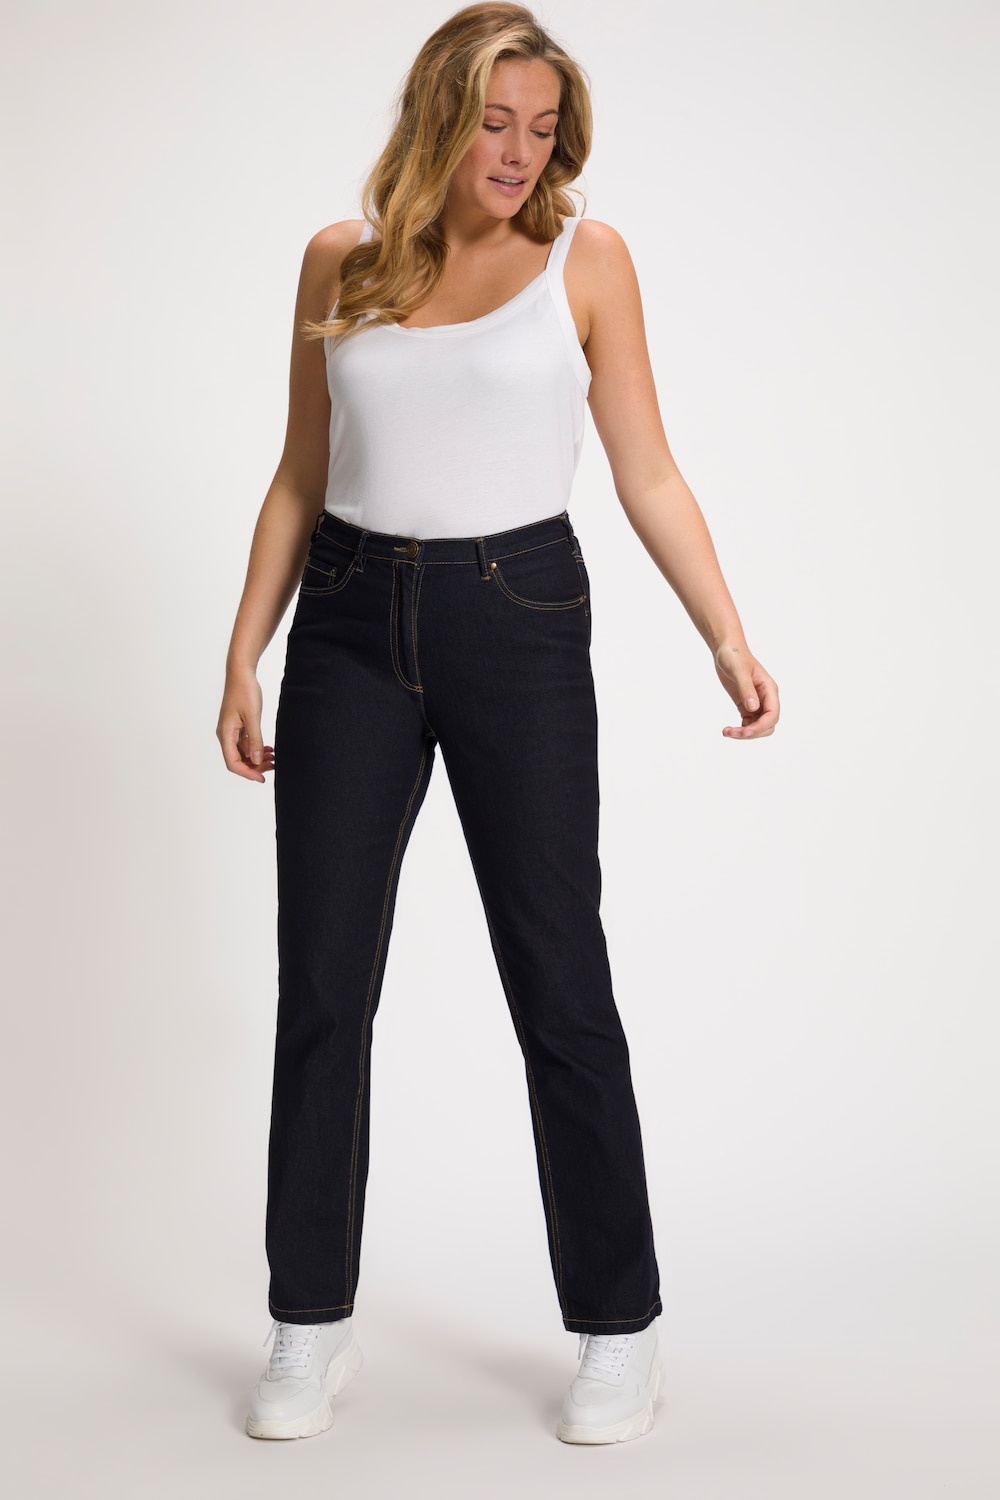 Jeans Mandy, gerades Bein, Stretch, 5-Pocket-Form